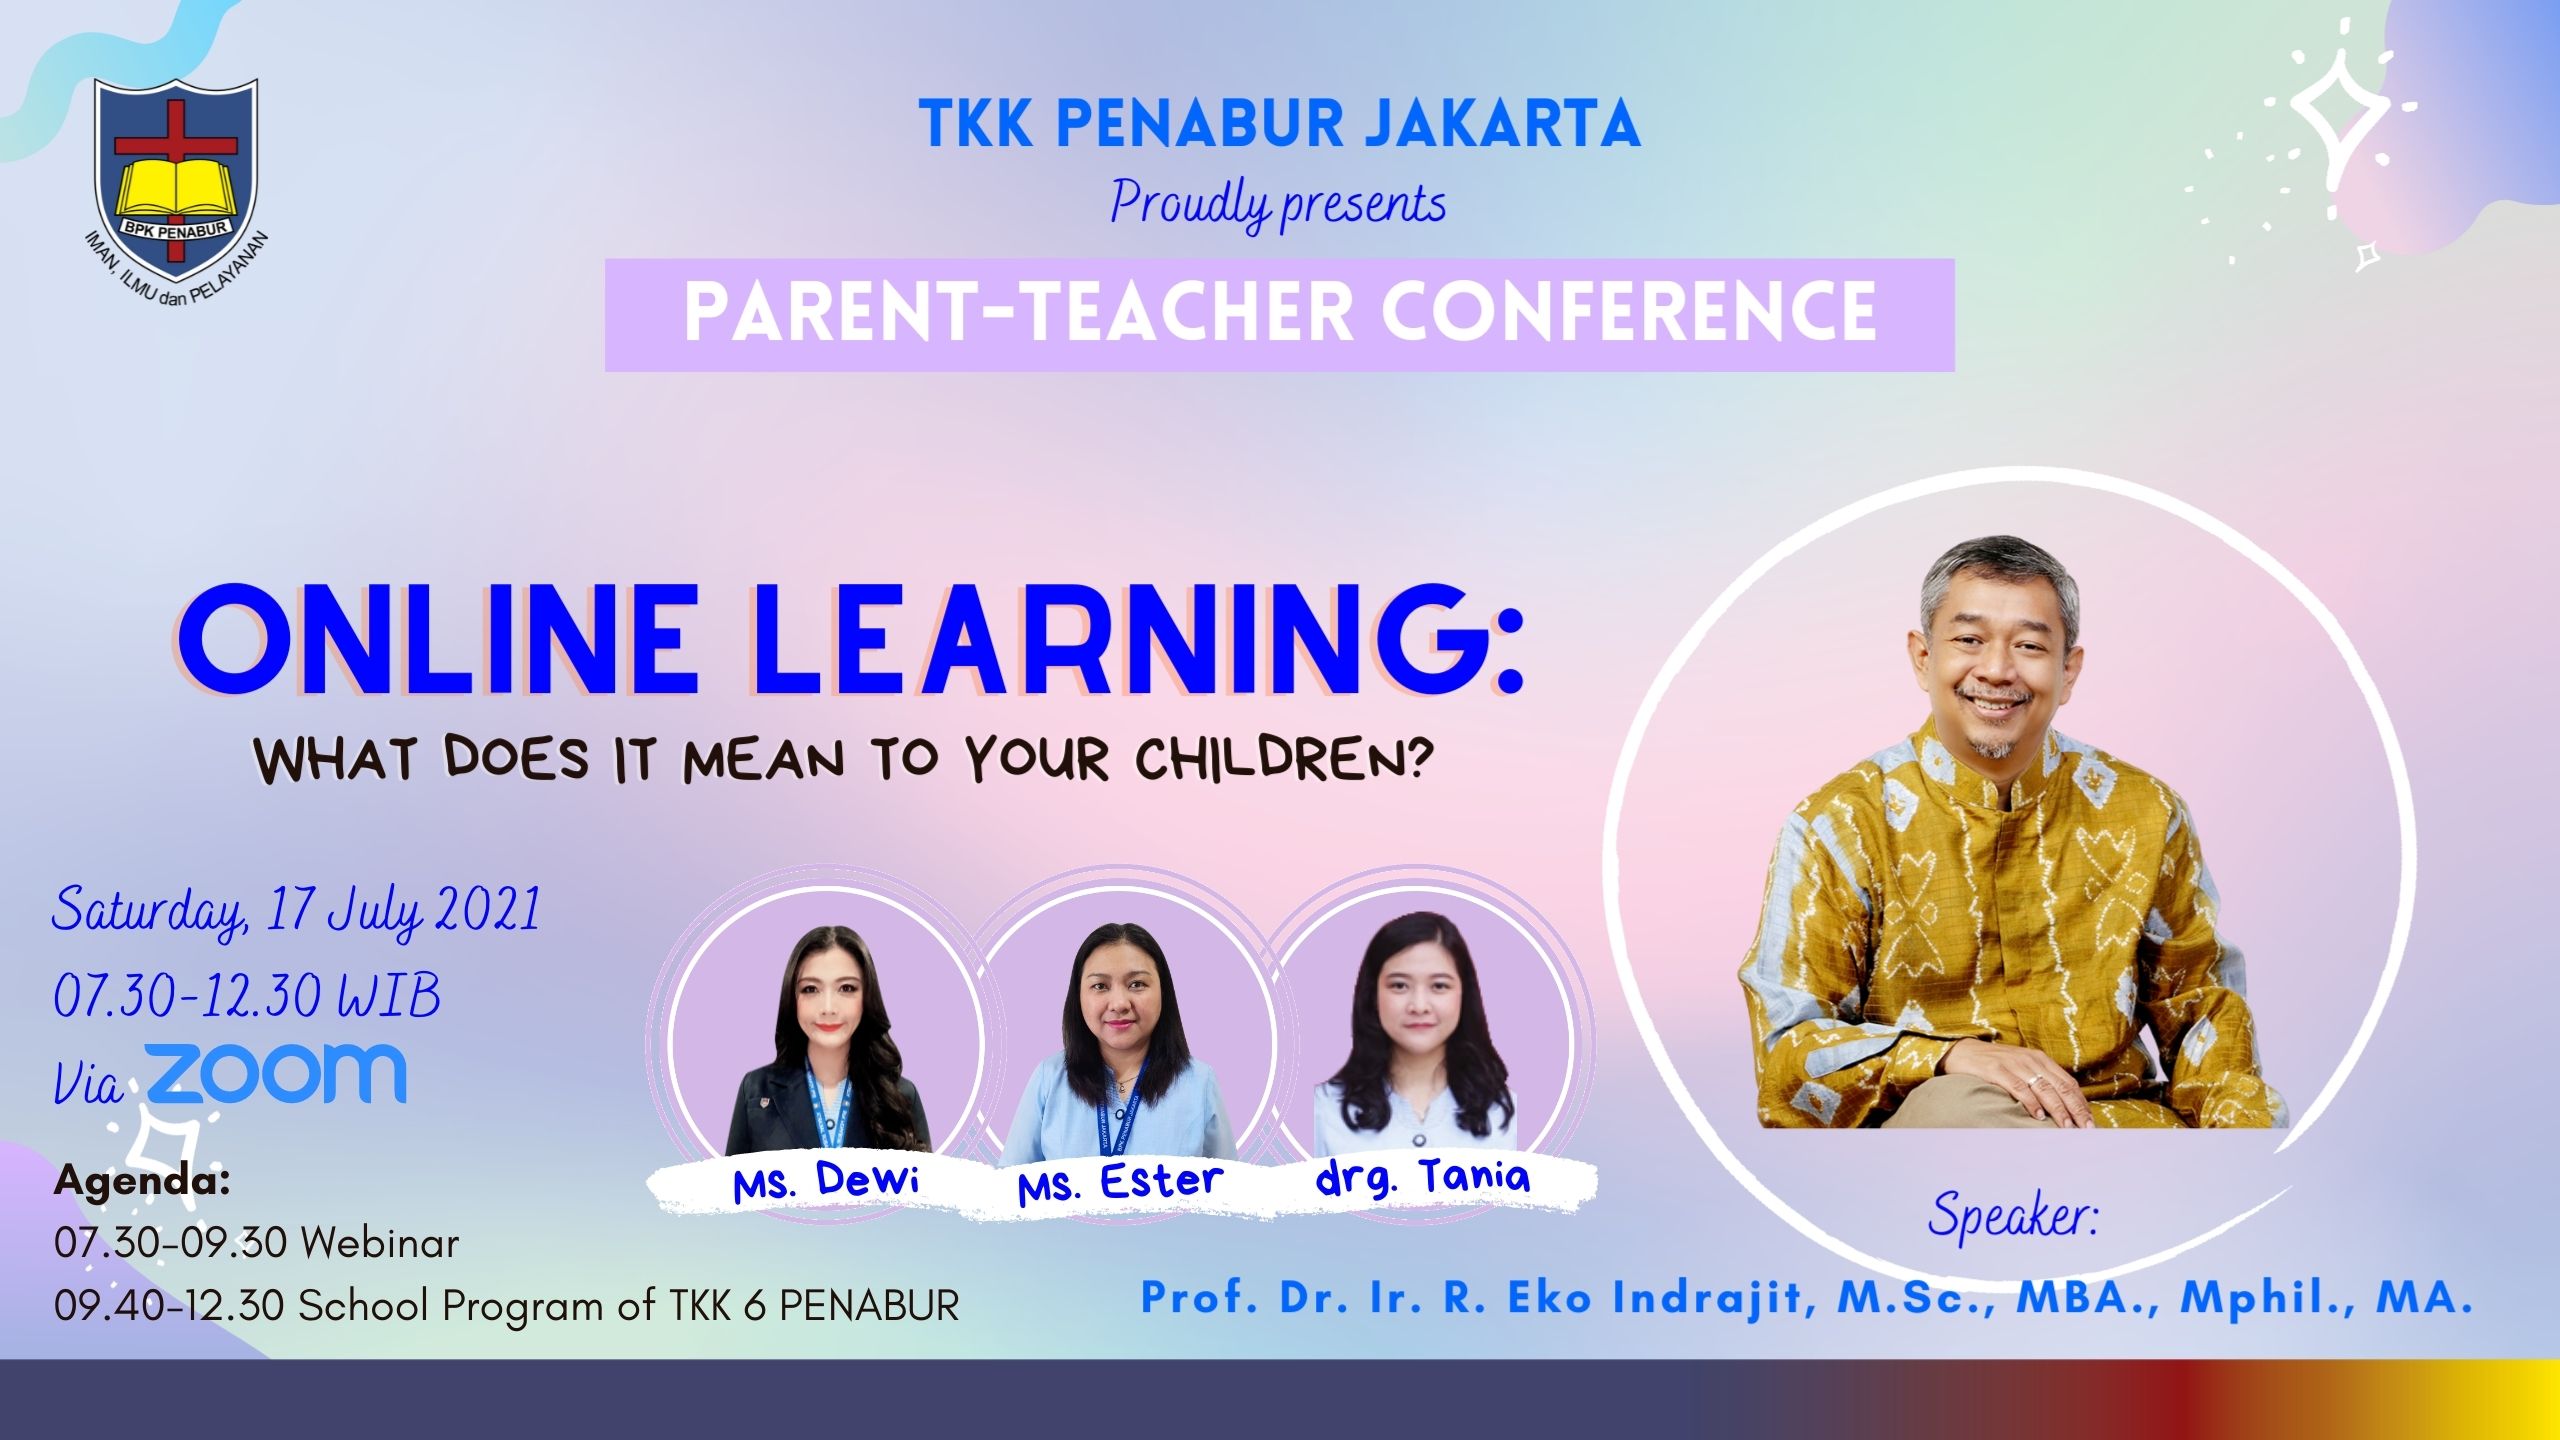 Parents-Teacher Conference TKK PENABUR Jakarta